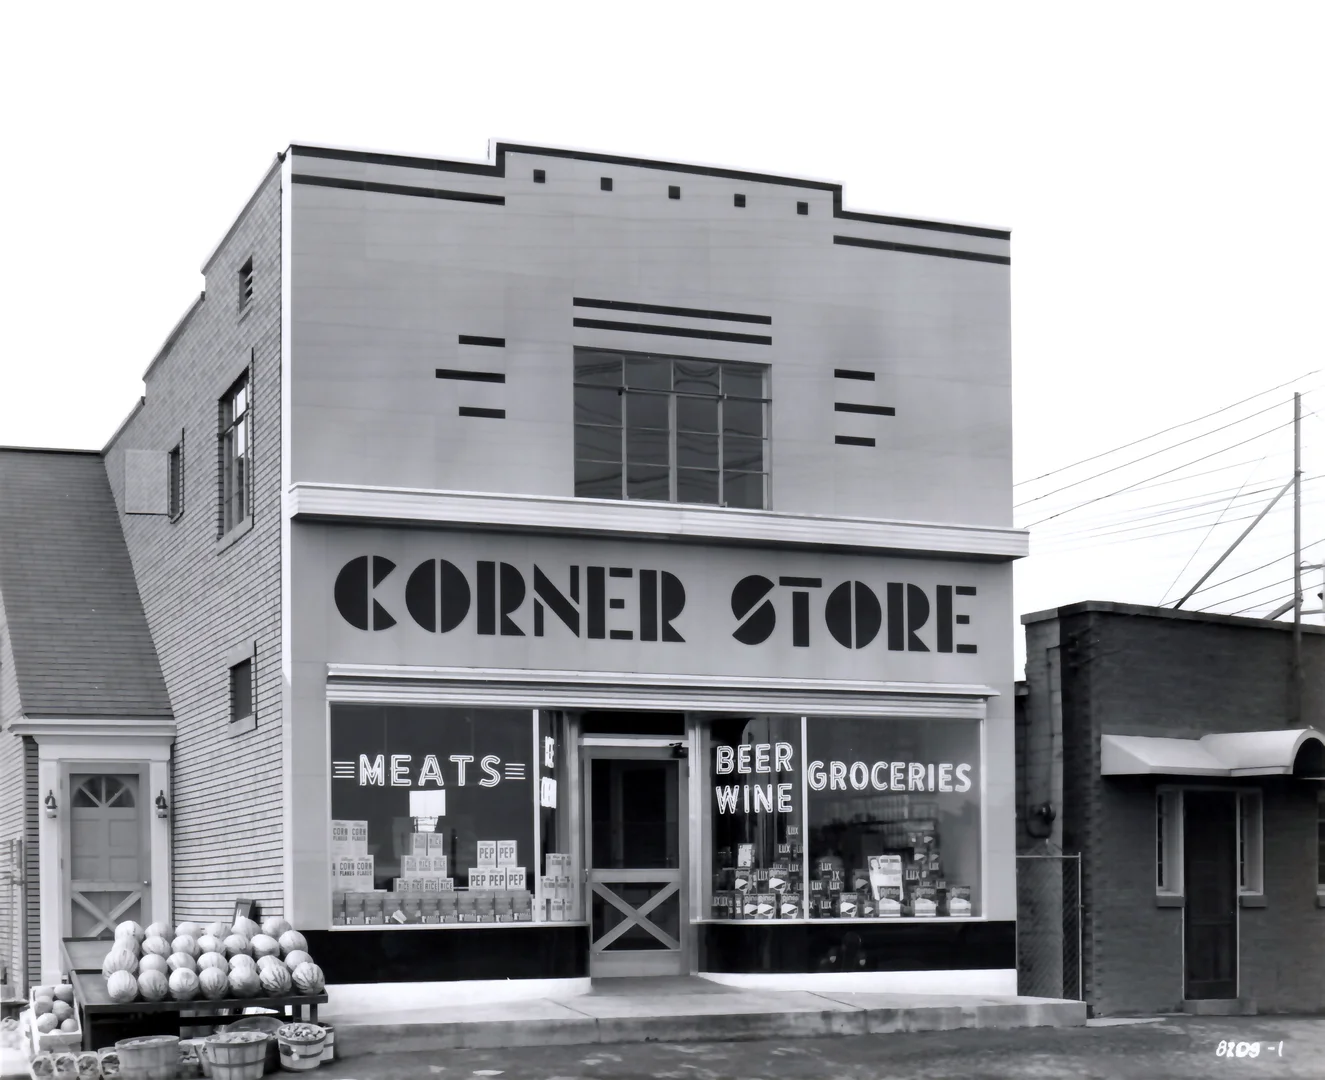 The Gondolier_Storefront